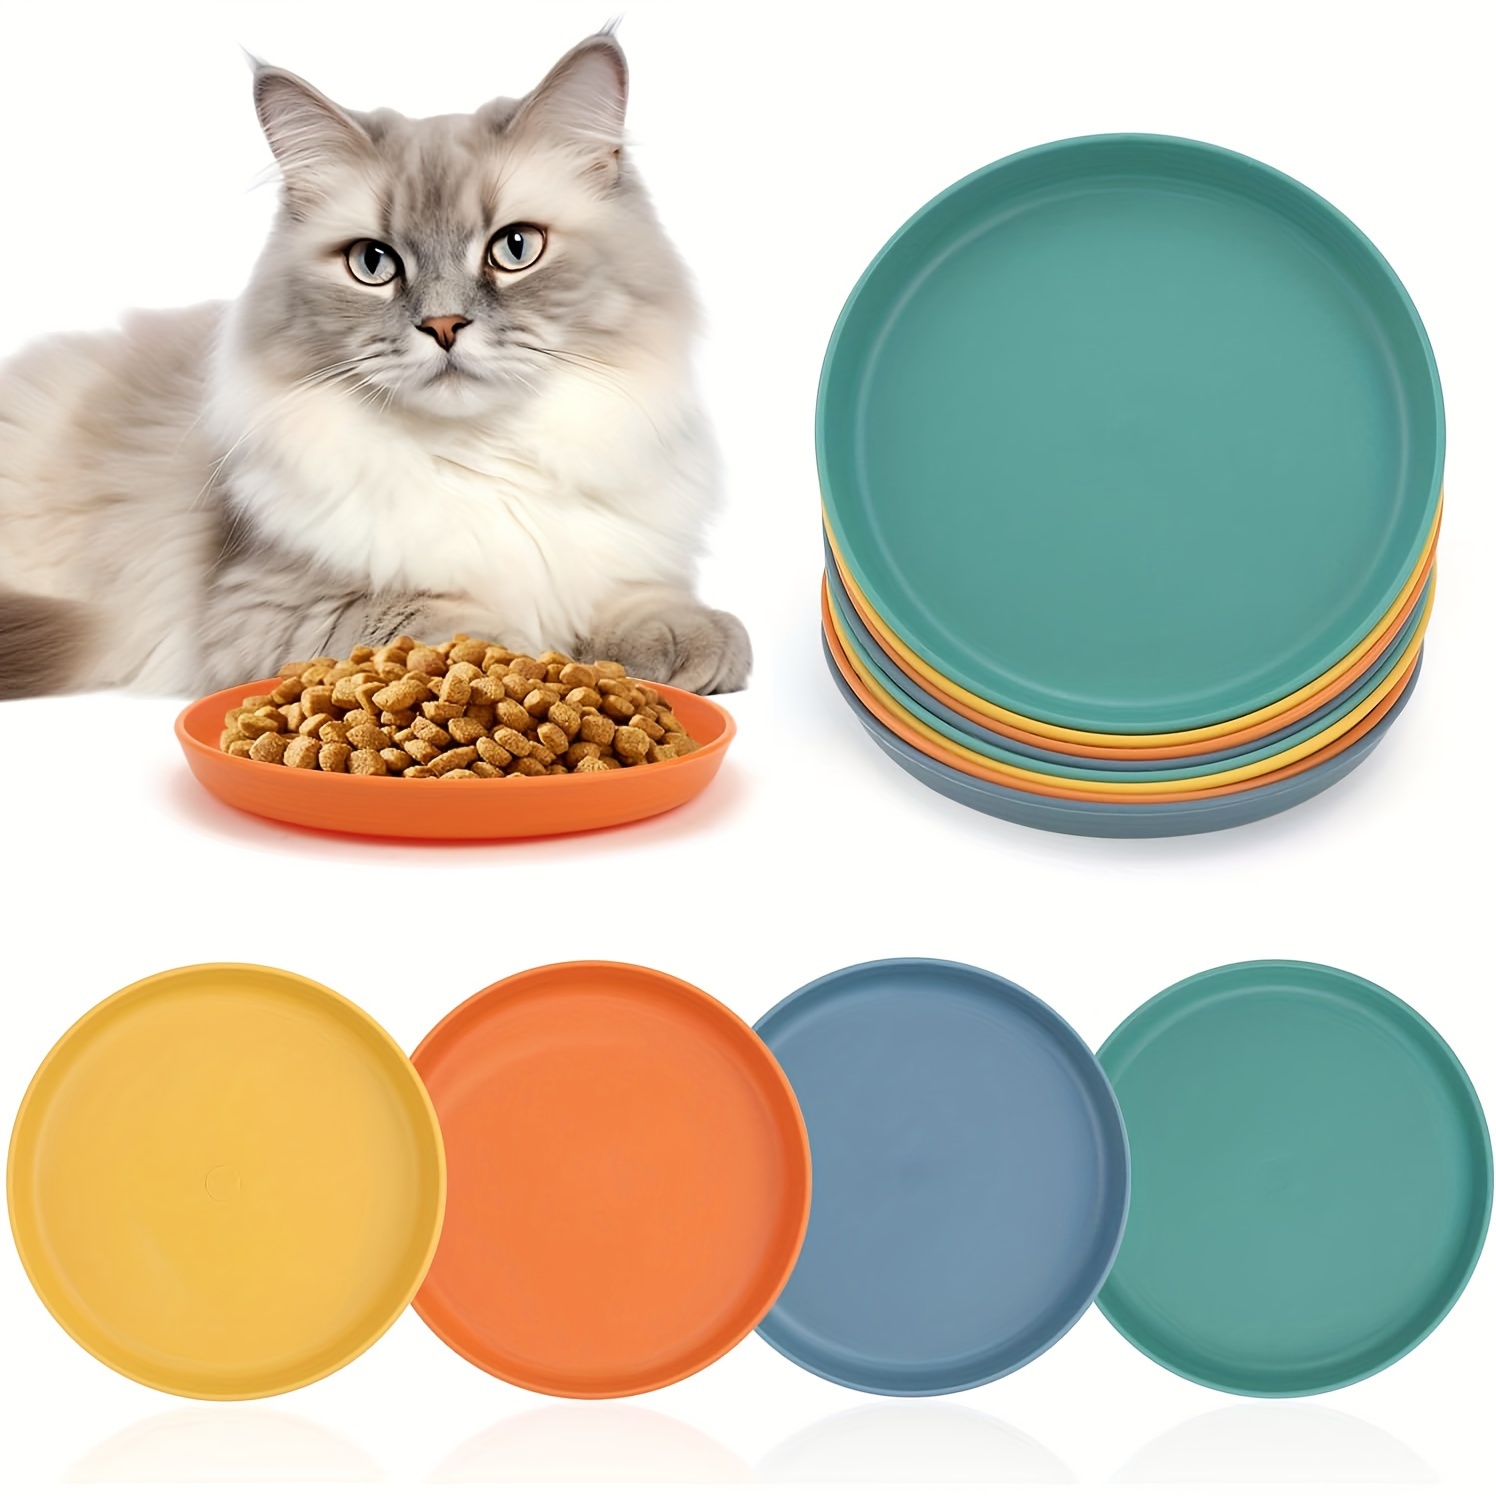 

8-piece Non-slip Plastic Cat Bowls - Flat Feeding Dishes For Kittens & Short-legged Cats